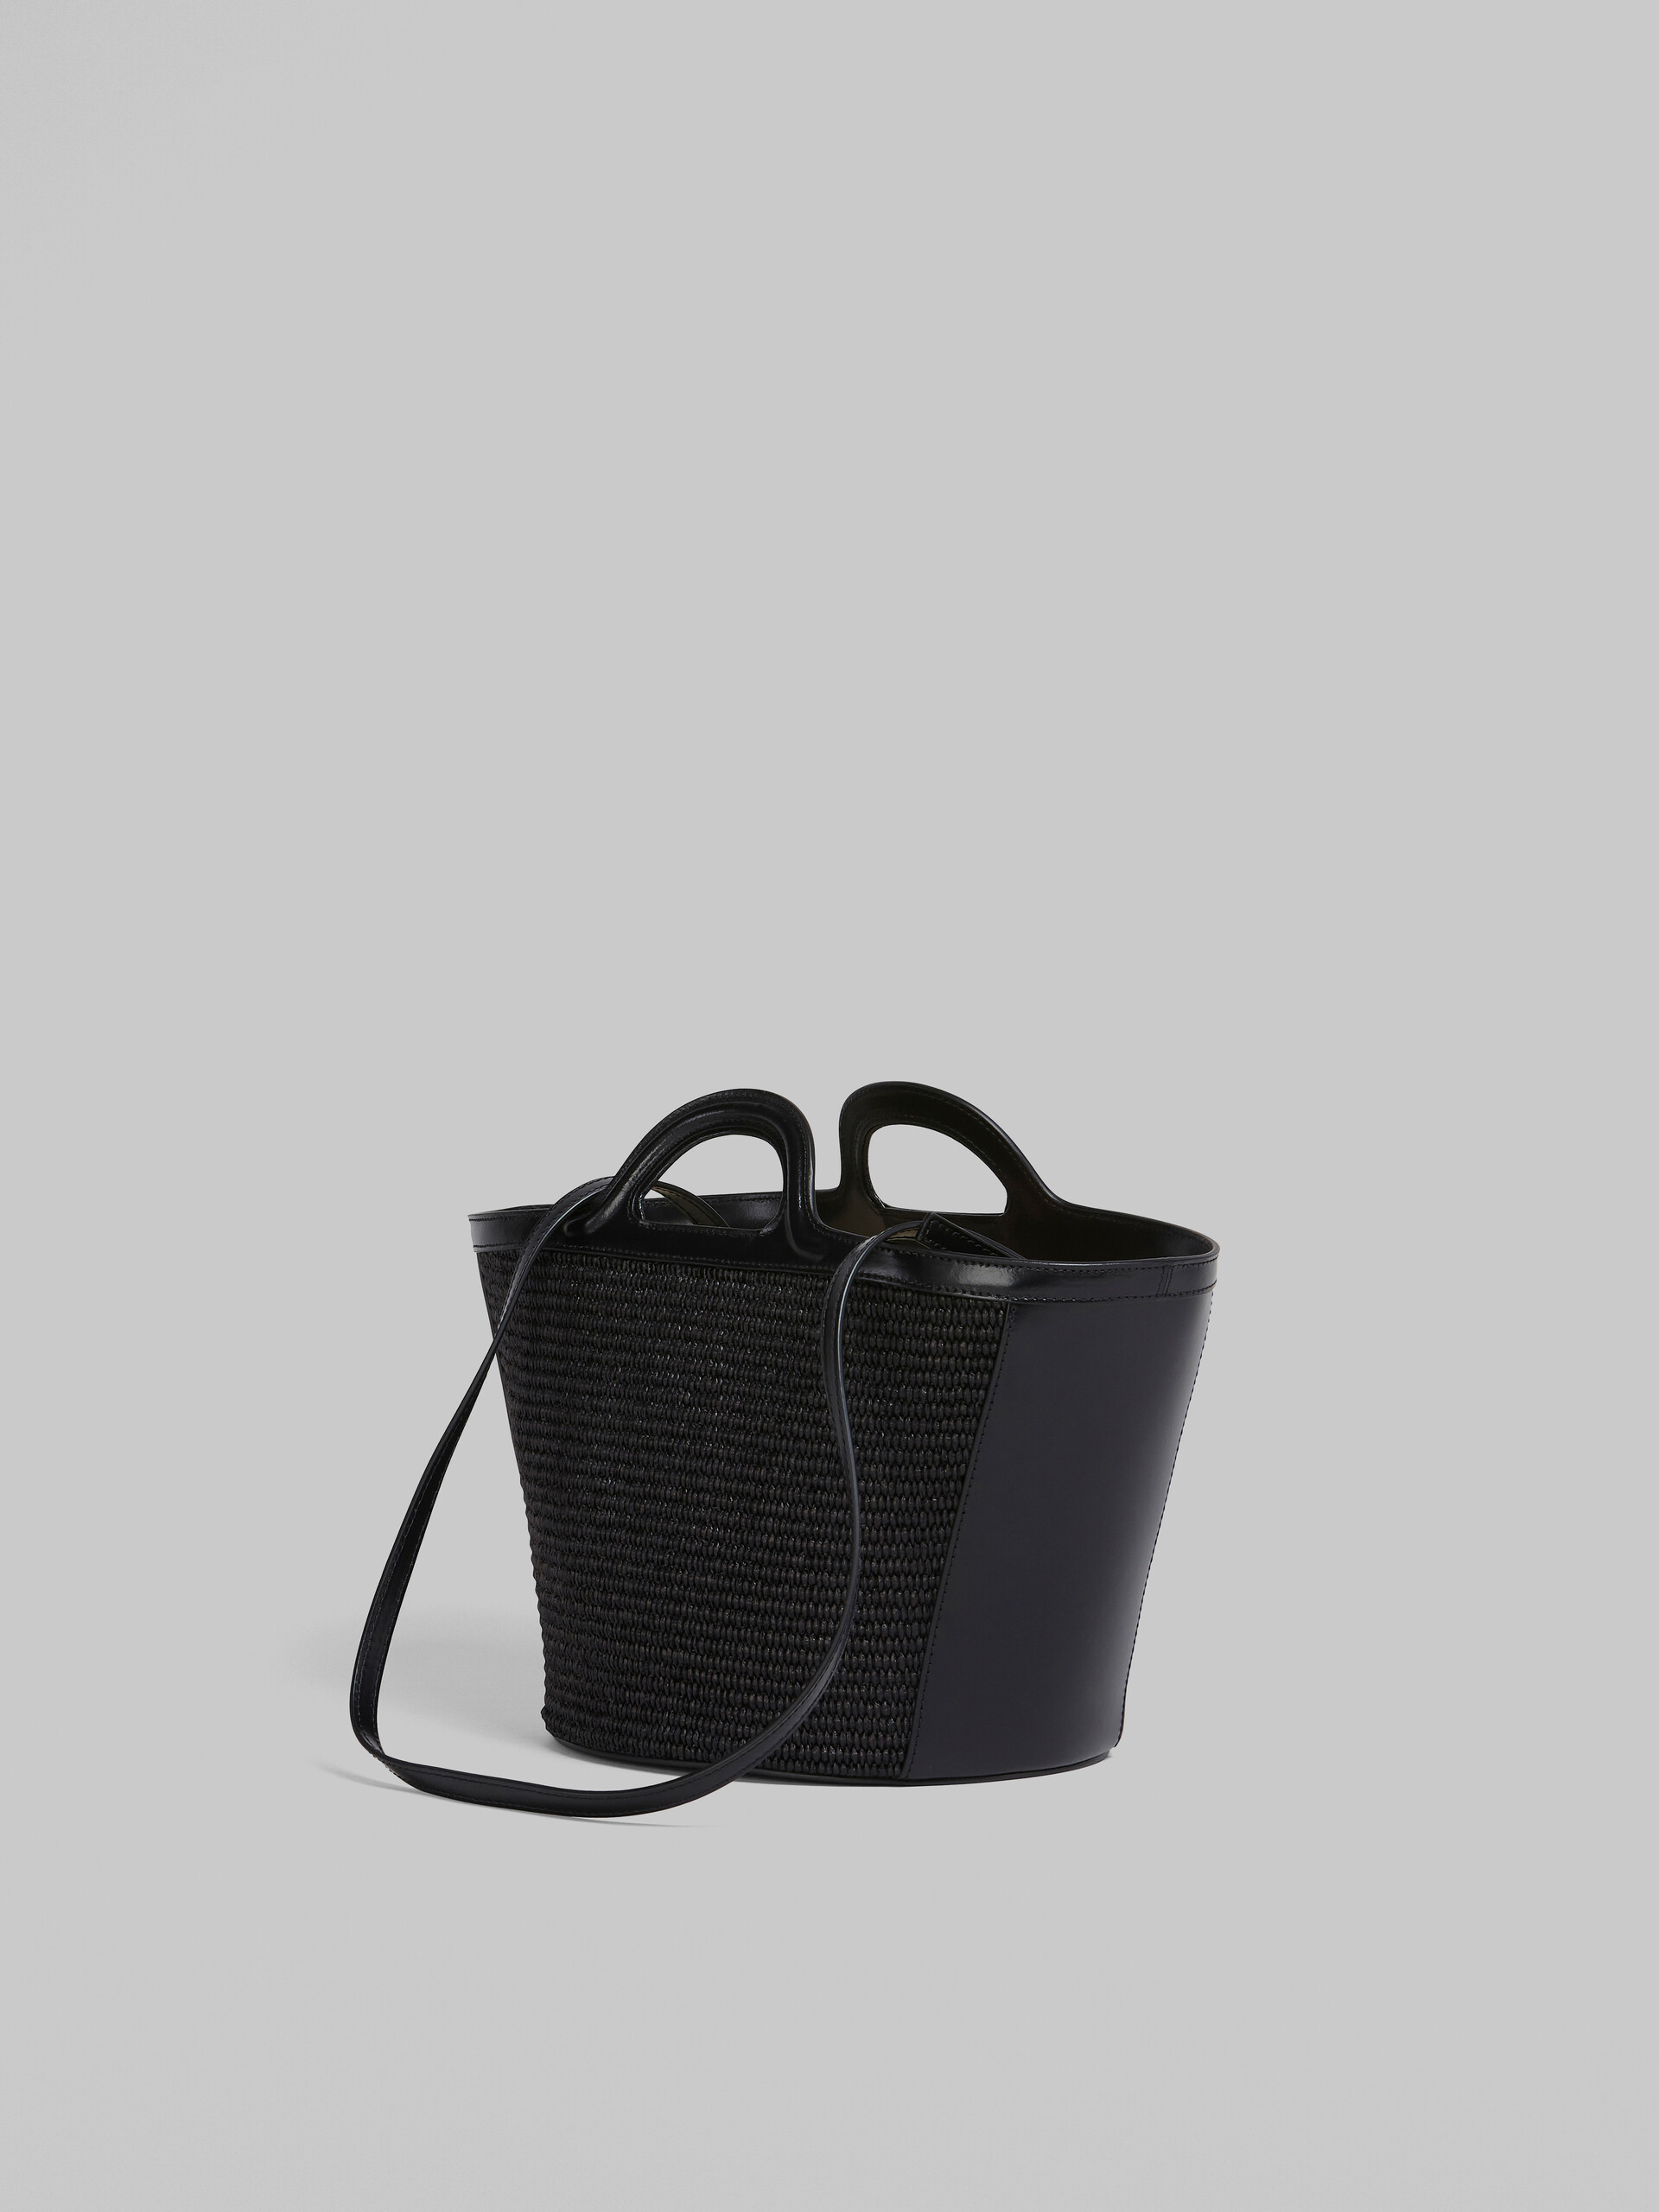 TROPICALIA small bag in black leather and raffia - Handbags - Image 3